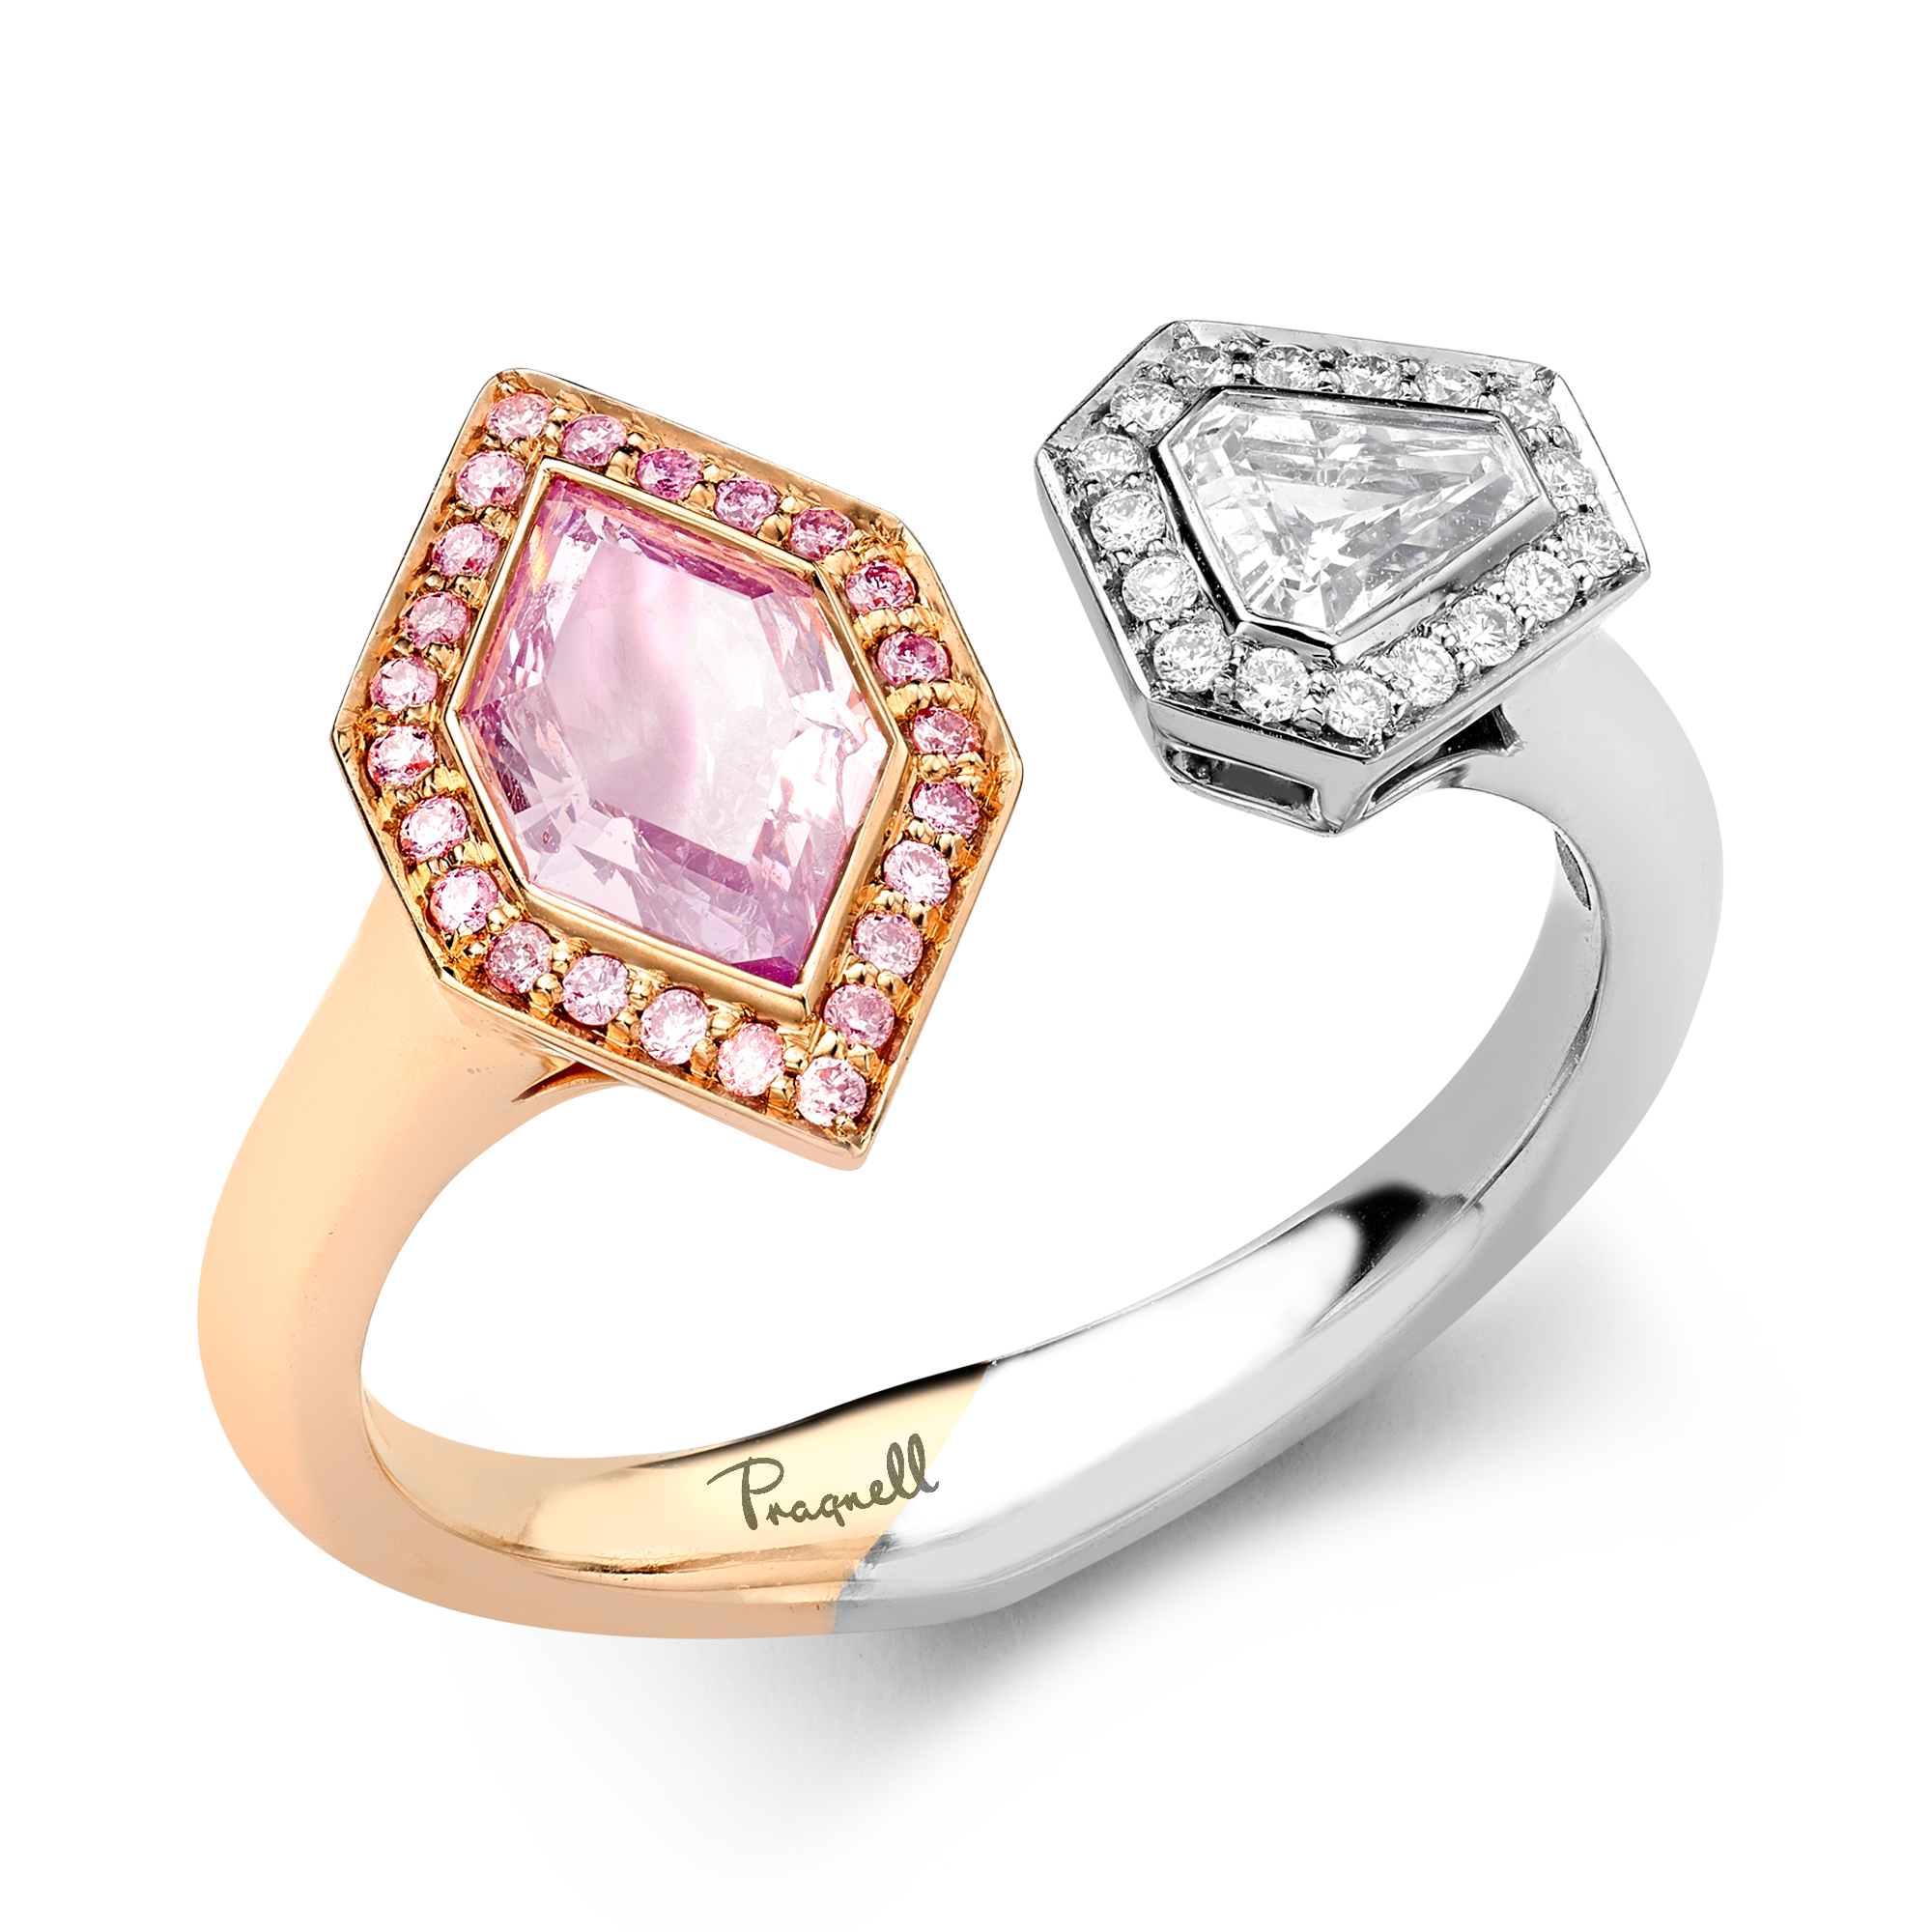 Masterpiece 0.78ct Fancy Intense Purplish-Pink Geometric Diamond Ring Hexagonal Cut, Rubover Set_1